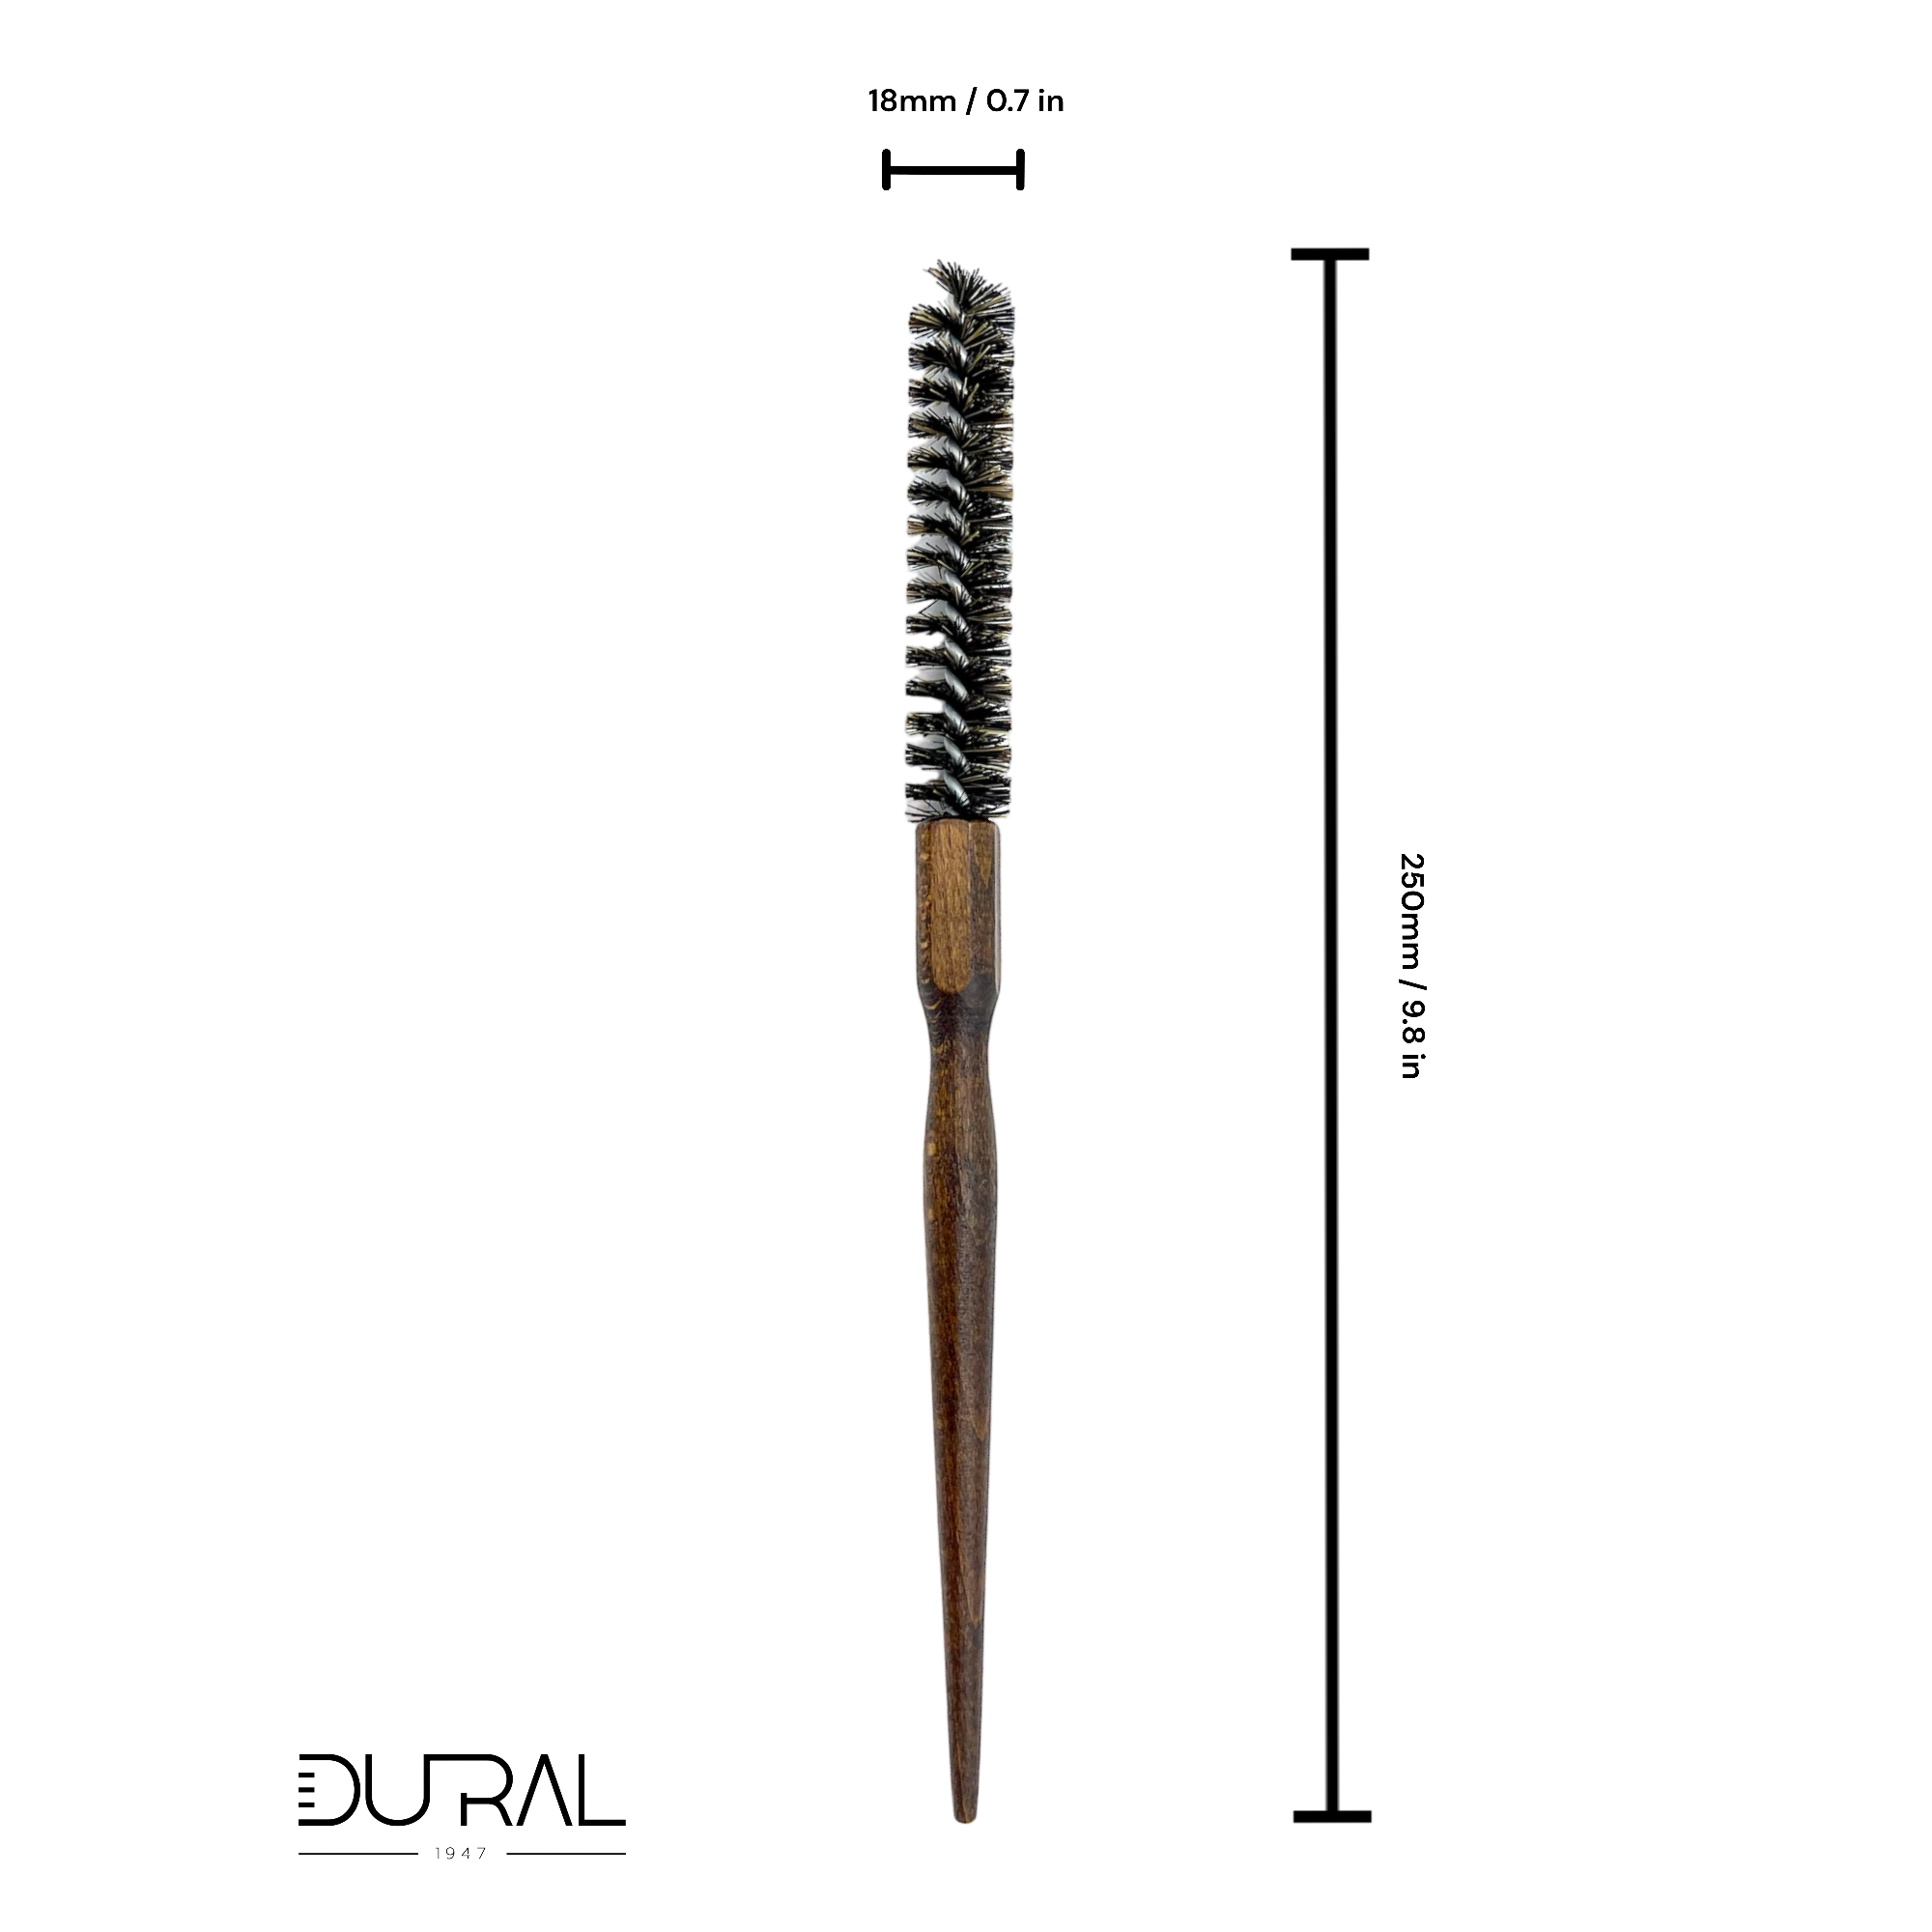 Dural Beech wood curling hair brush with natural bristles - brown